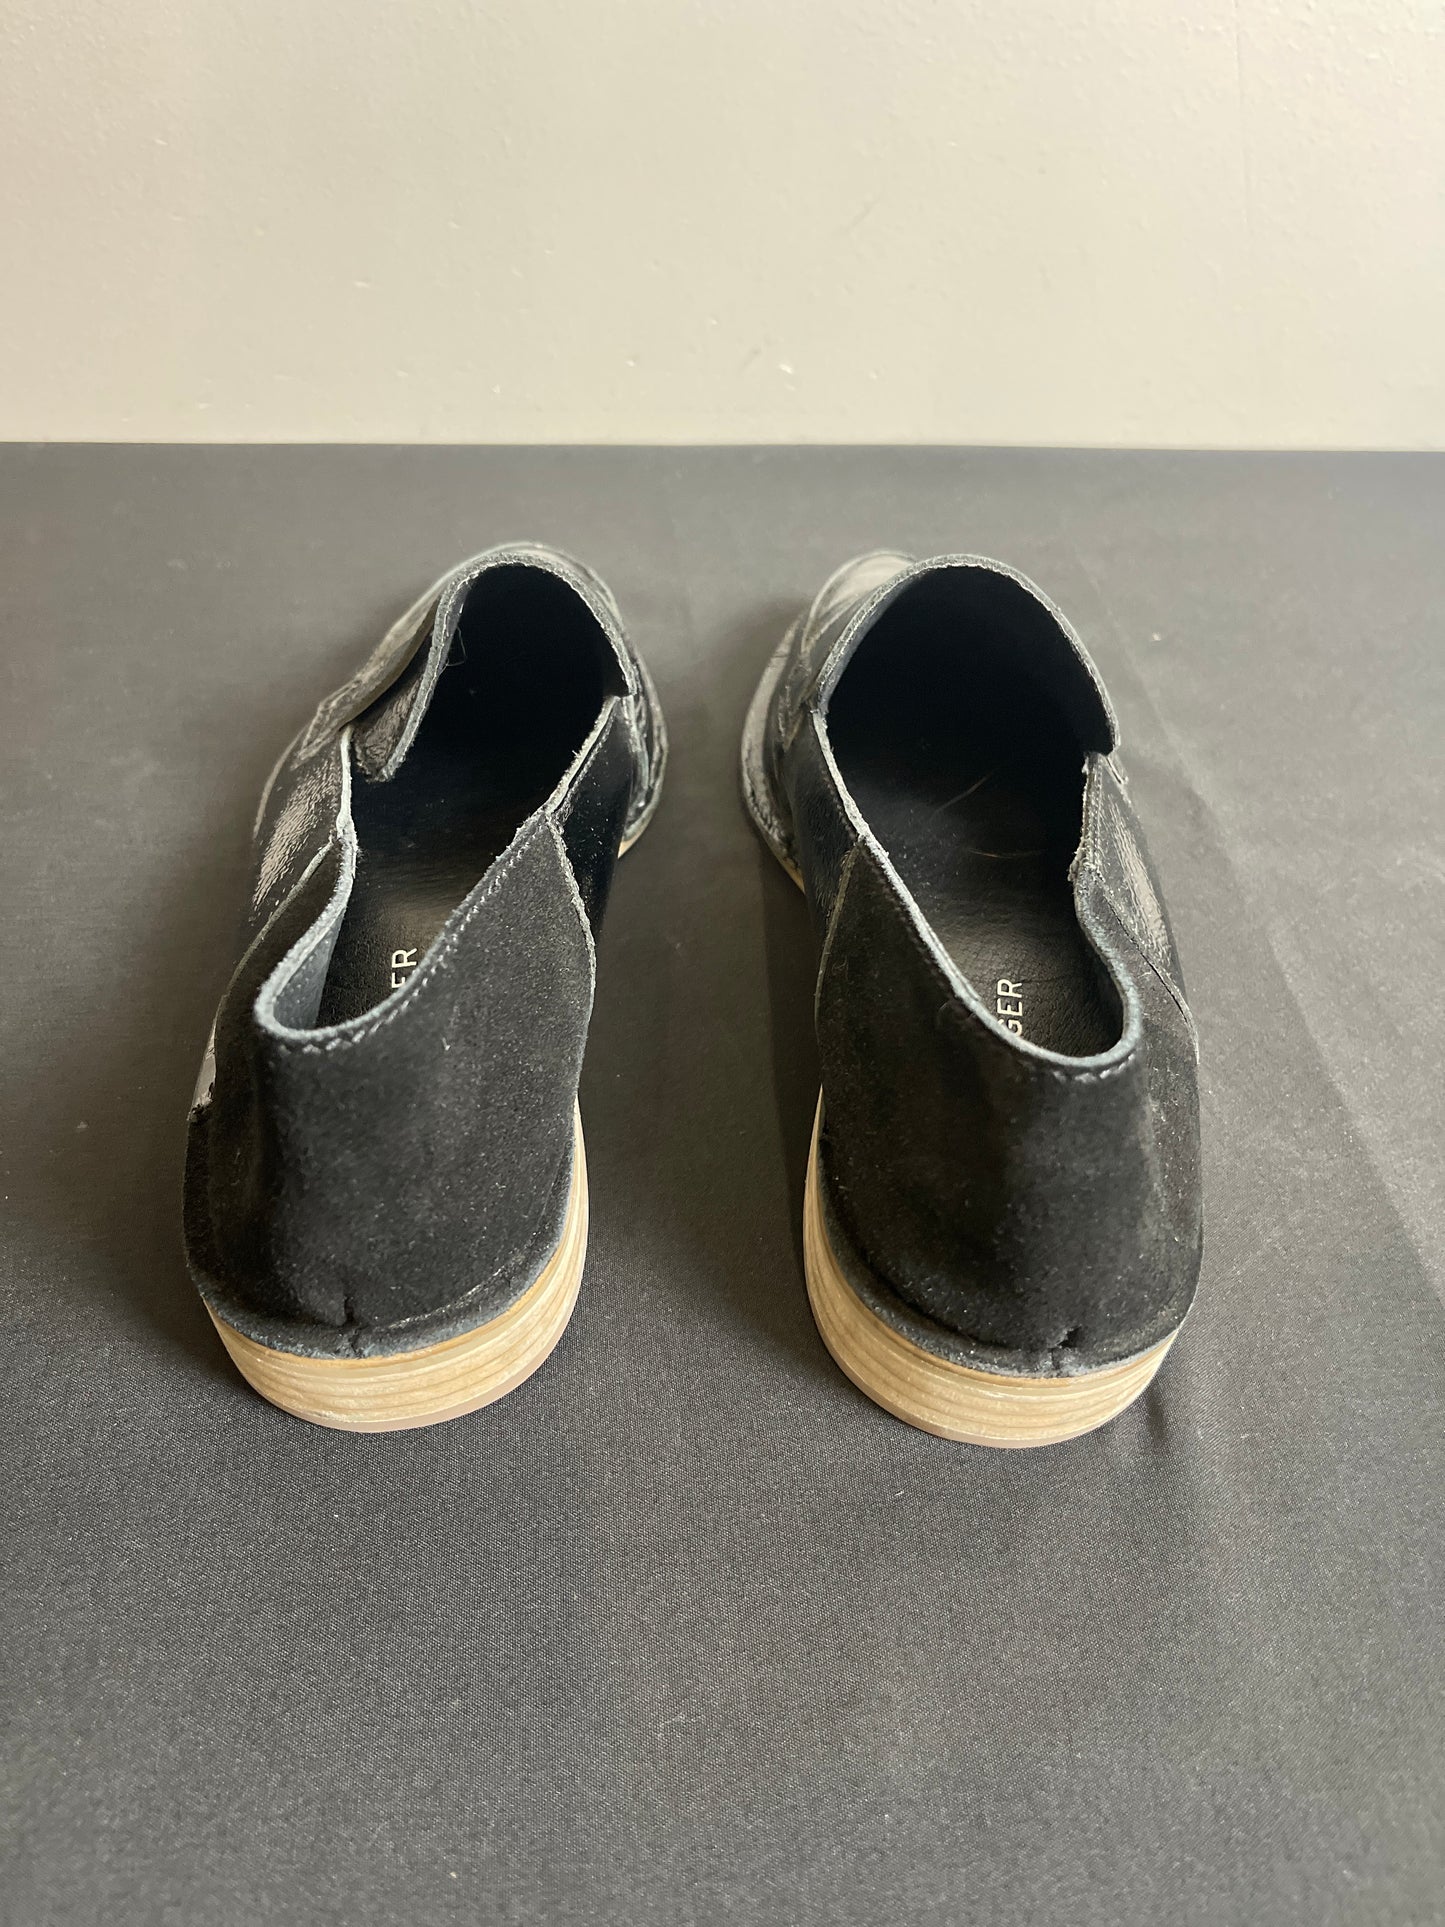 Shoes Heels Stiletto By Antonio Melani  Size: 8.5